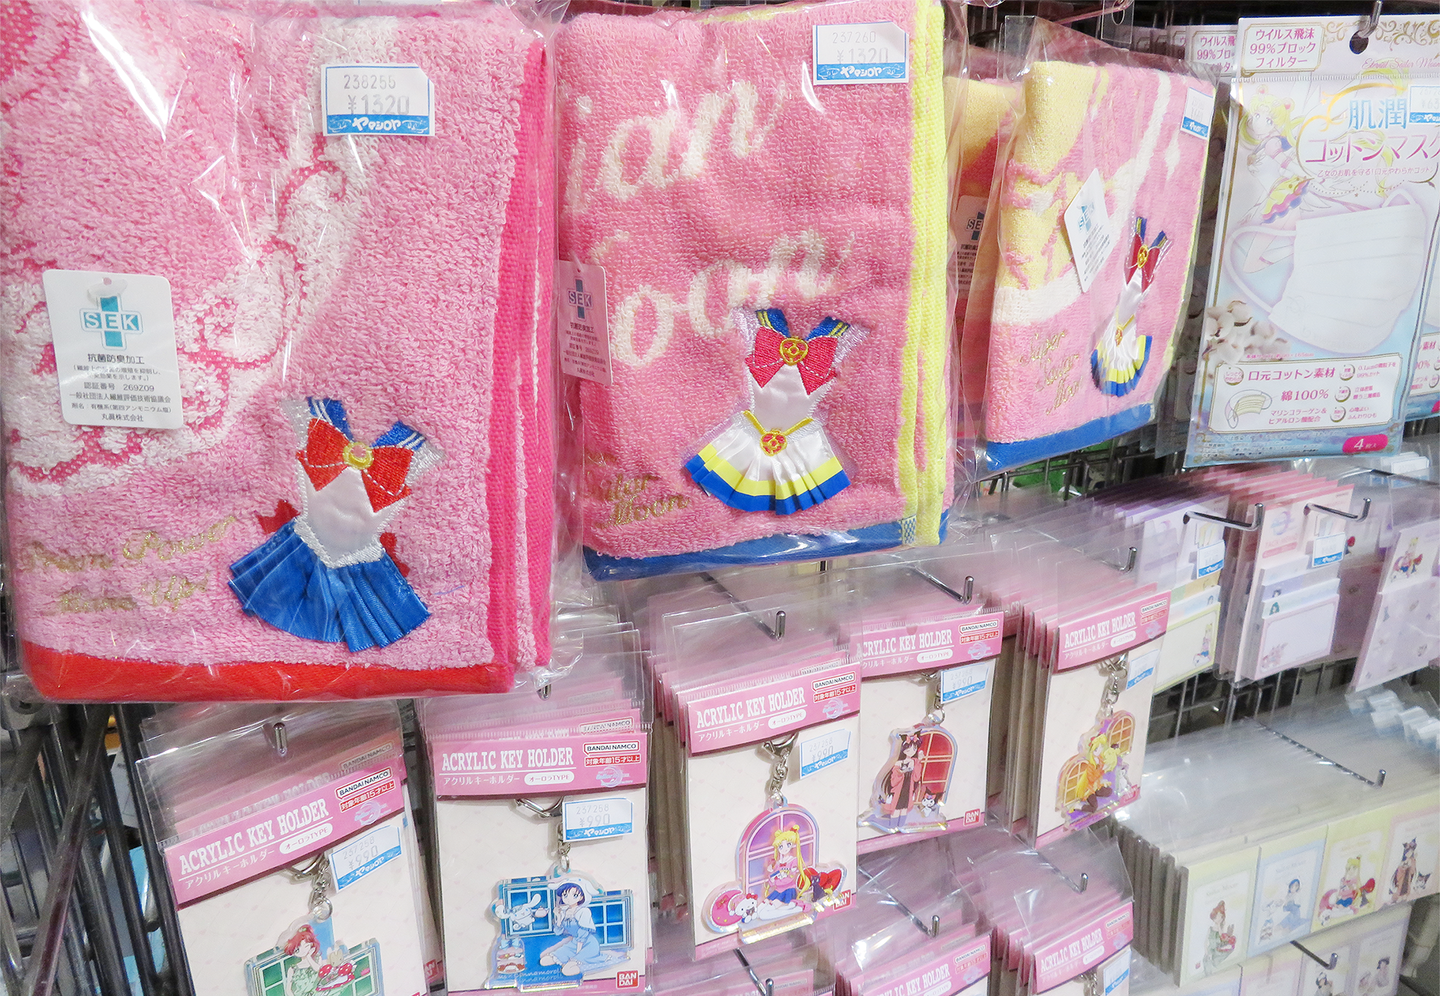 Images of Sailor moon merchandise sold at YAMASHIROYA2